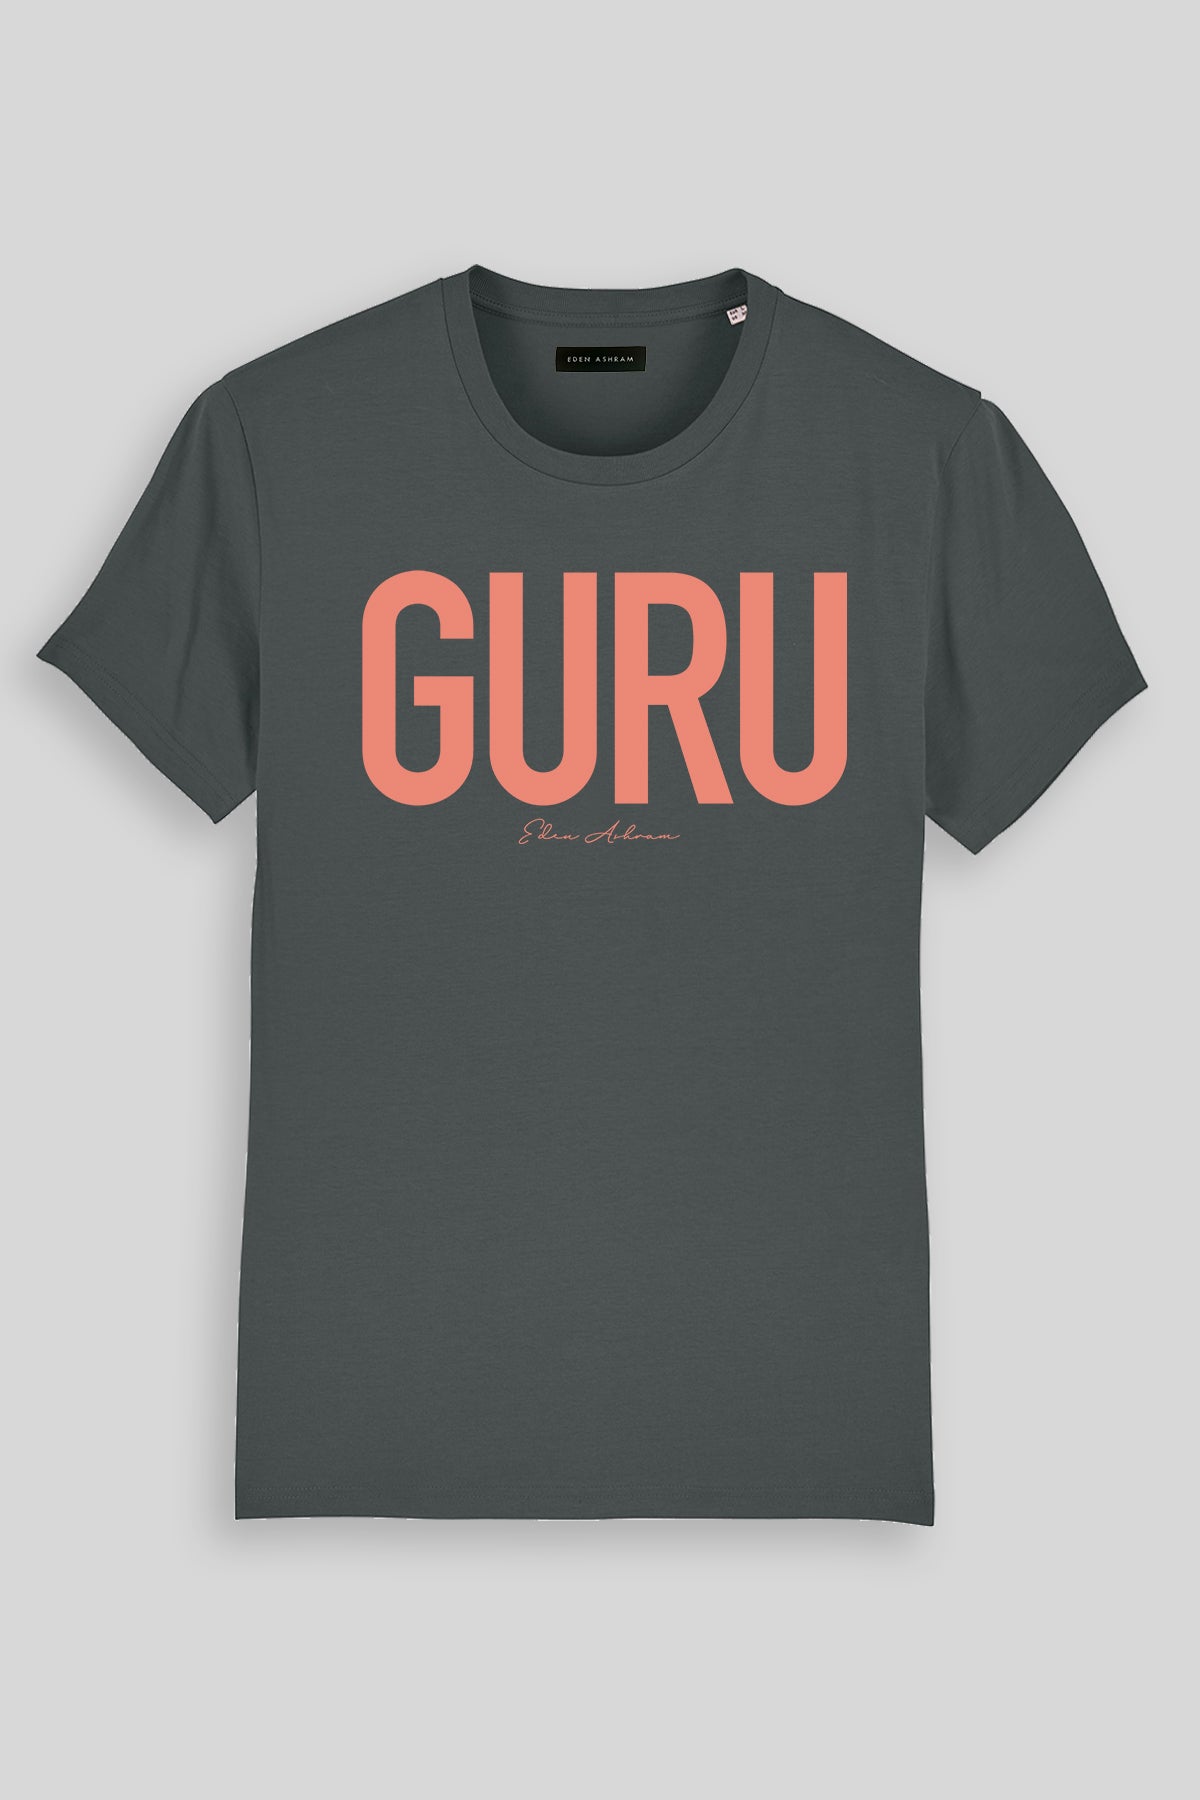 EDEN ASHRAM Guru Premium Classic T-Shirt India Ink Grey